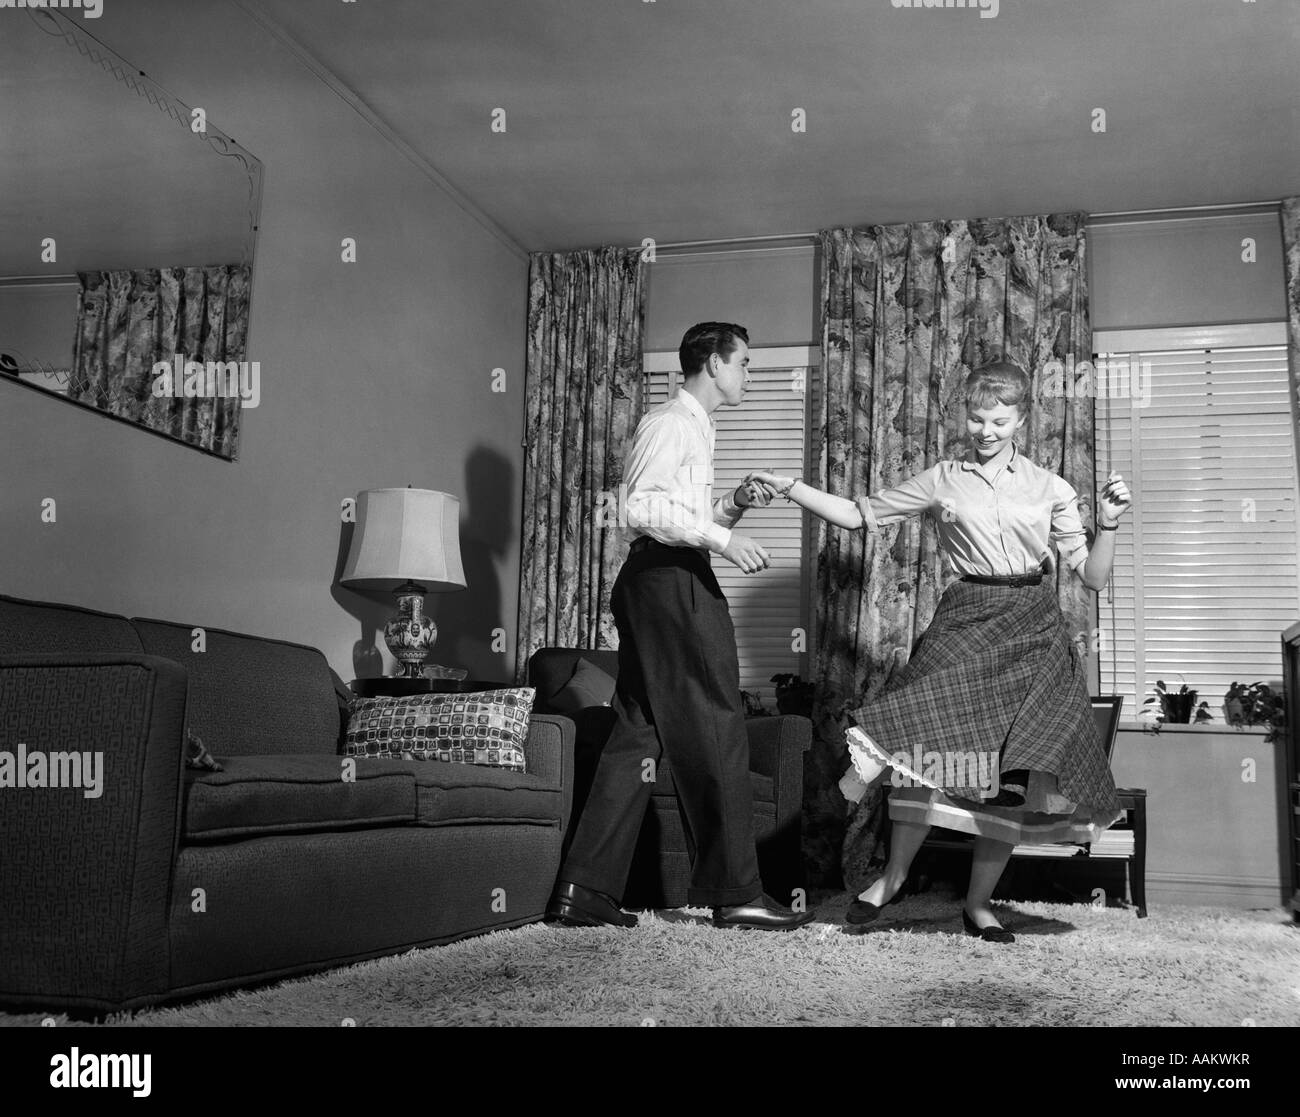 1950s TEEN COUPLE DOING JITTERBUG ROCK AND ROLL DANCE IN LIVING ROOM MAN WOMAN BOY GIRL Stock Photo